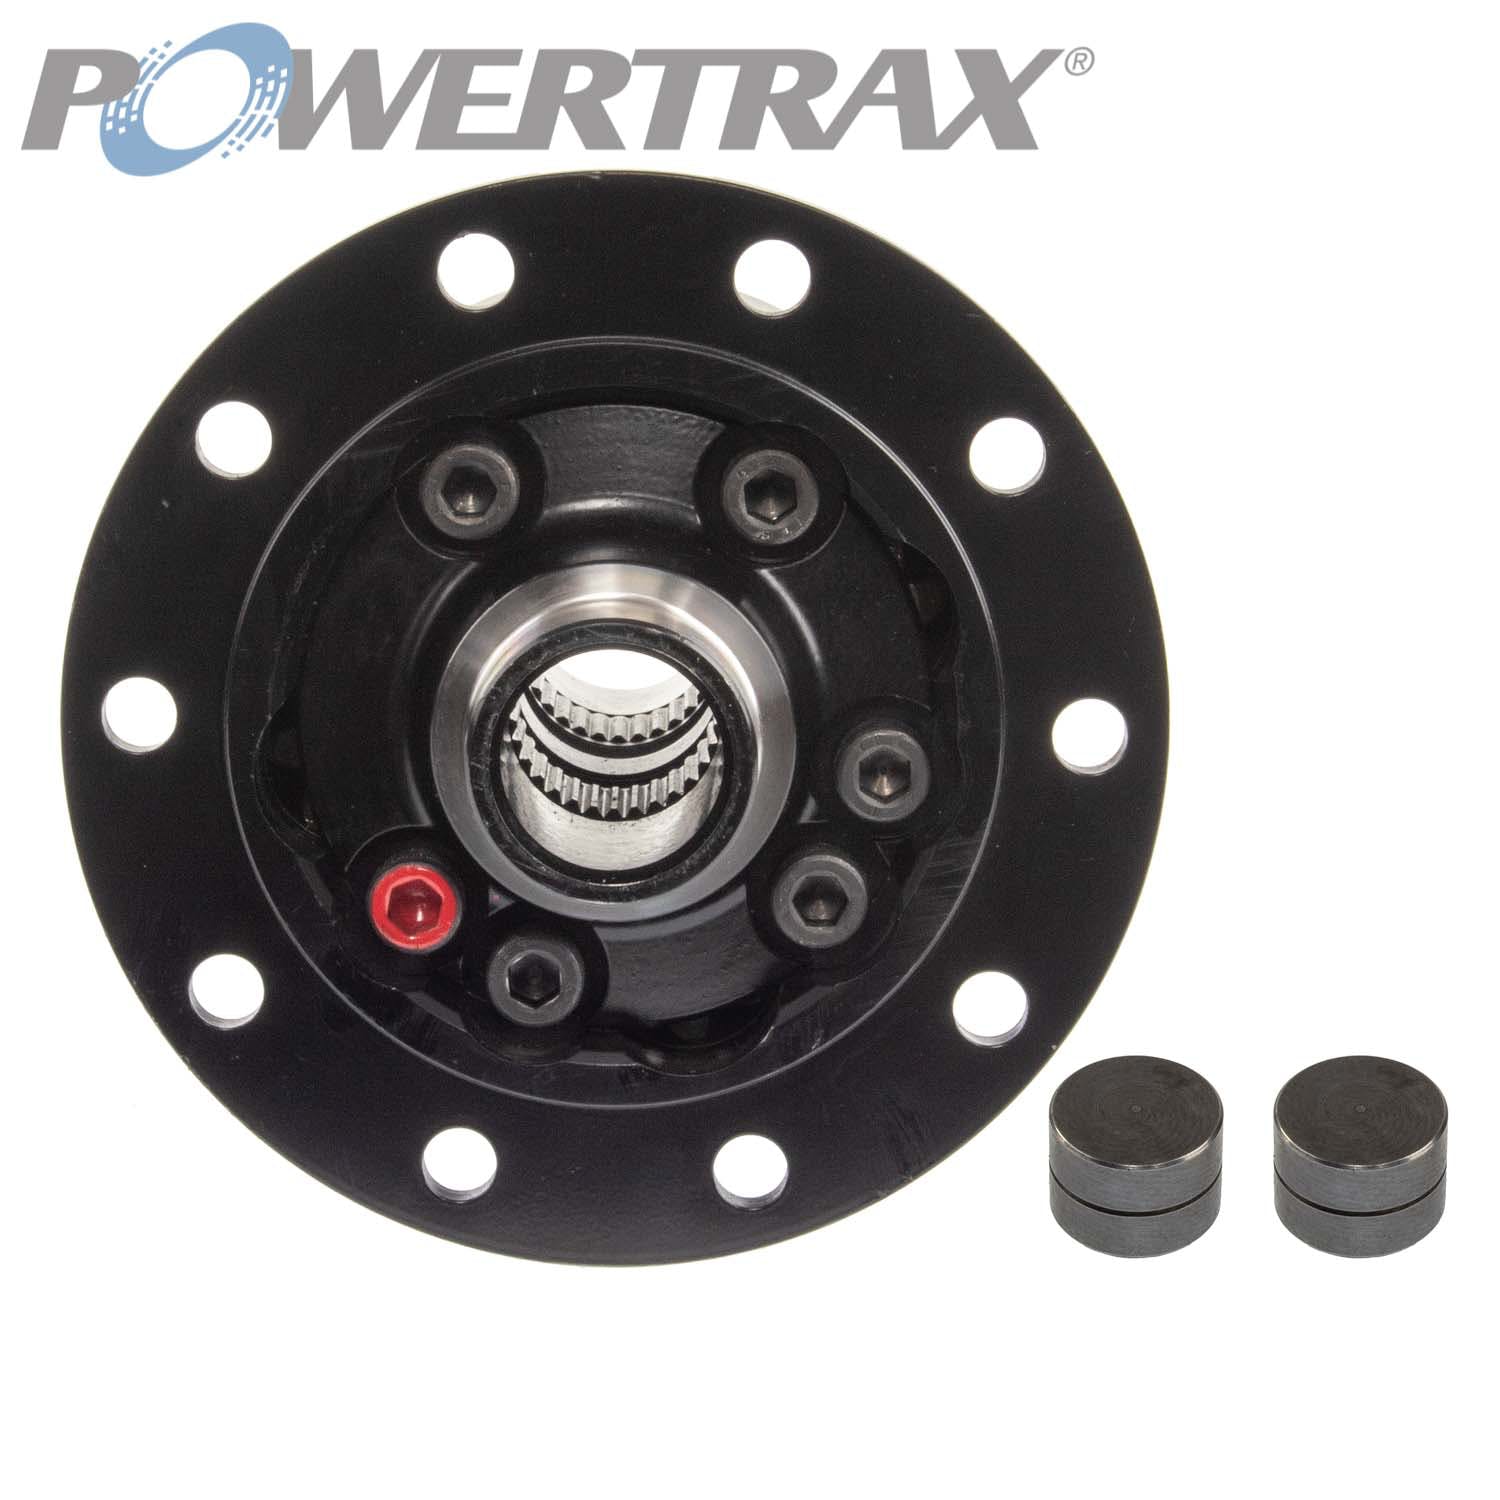 PowerTrax GT247528 Powertrax - Grip PRO Traction System